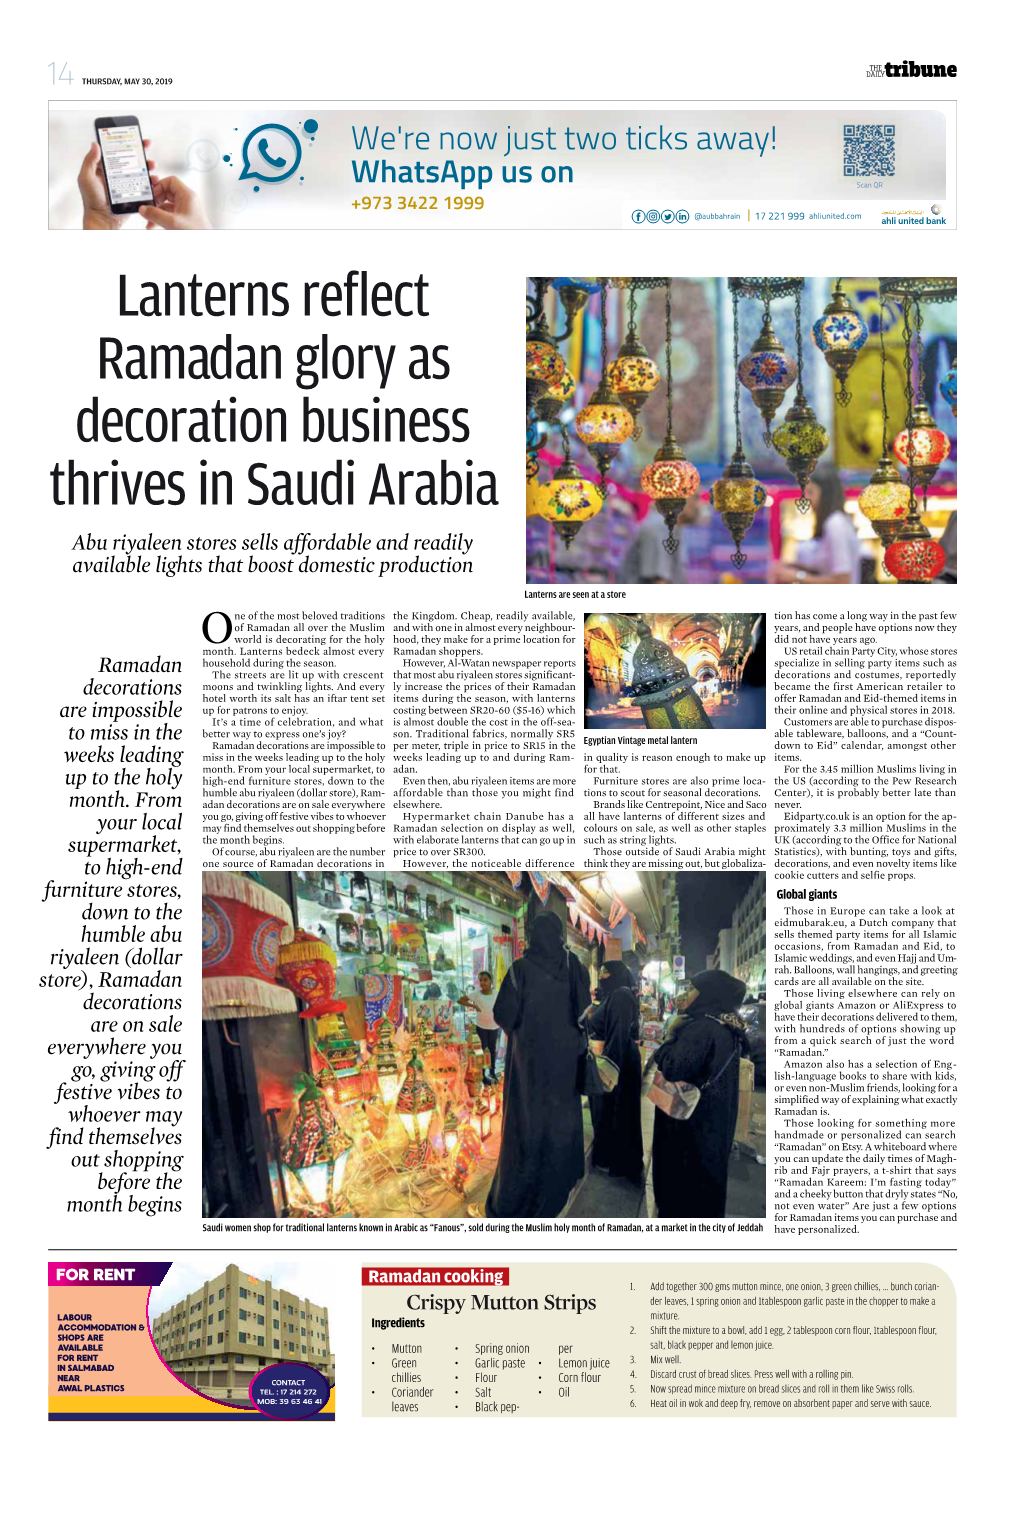 Lanterns Reflect Ramadan Glory As Decoration Business Thrives In